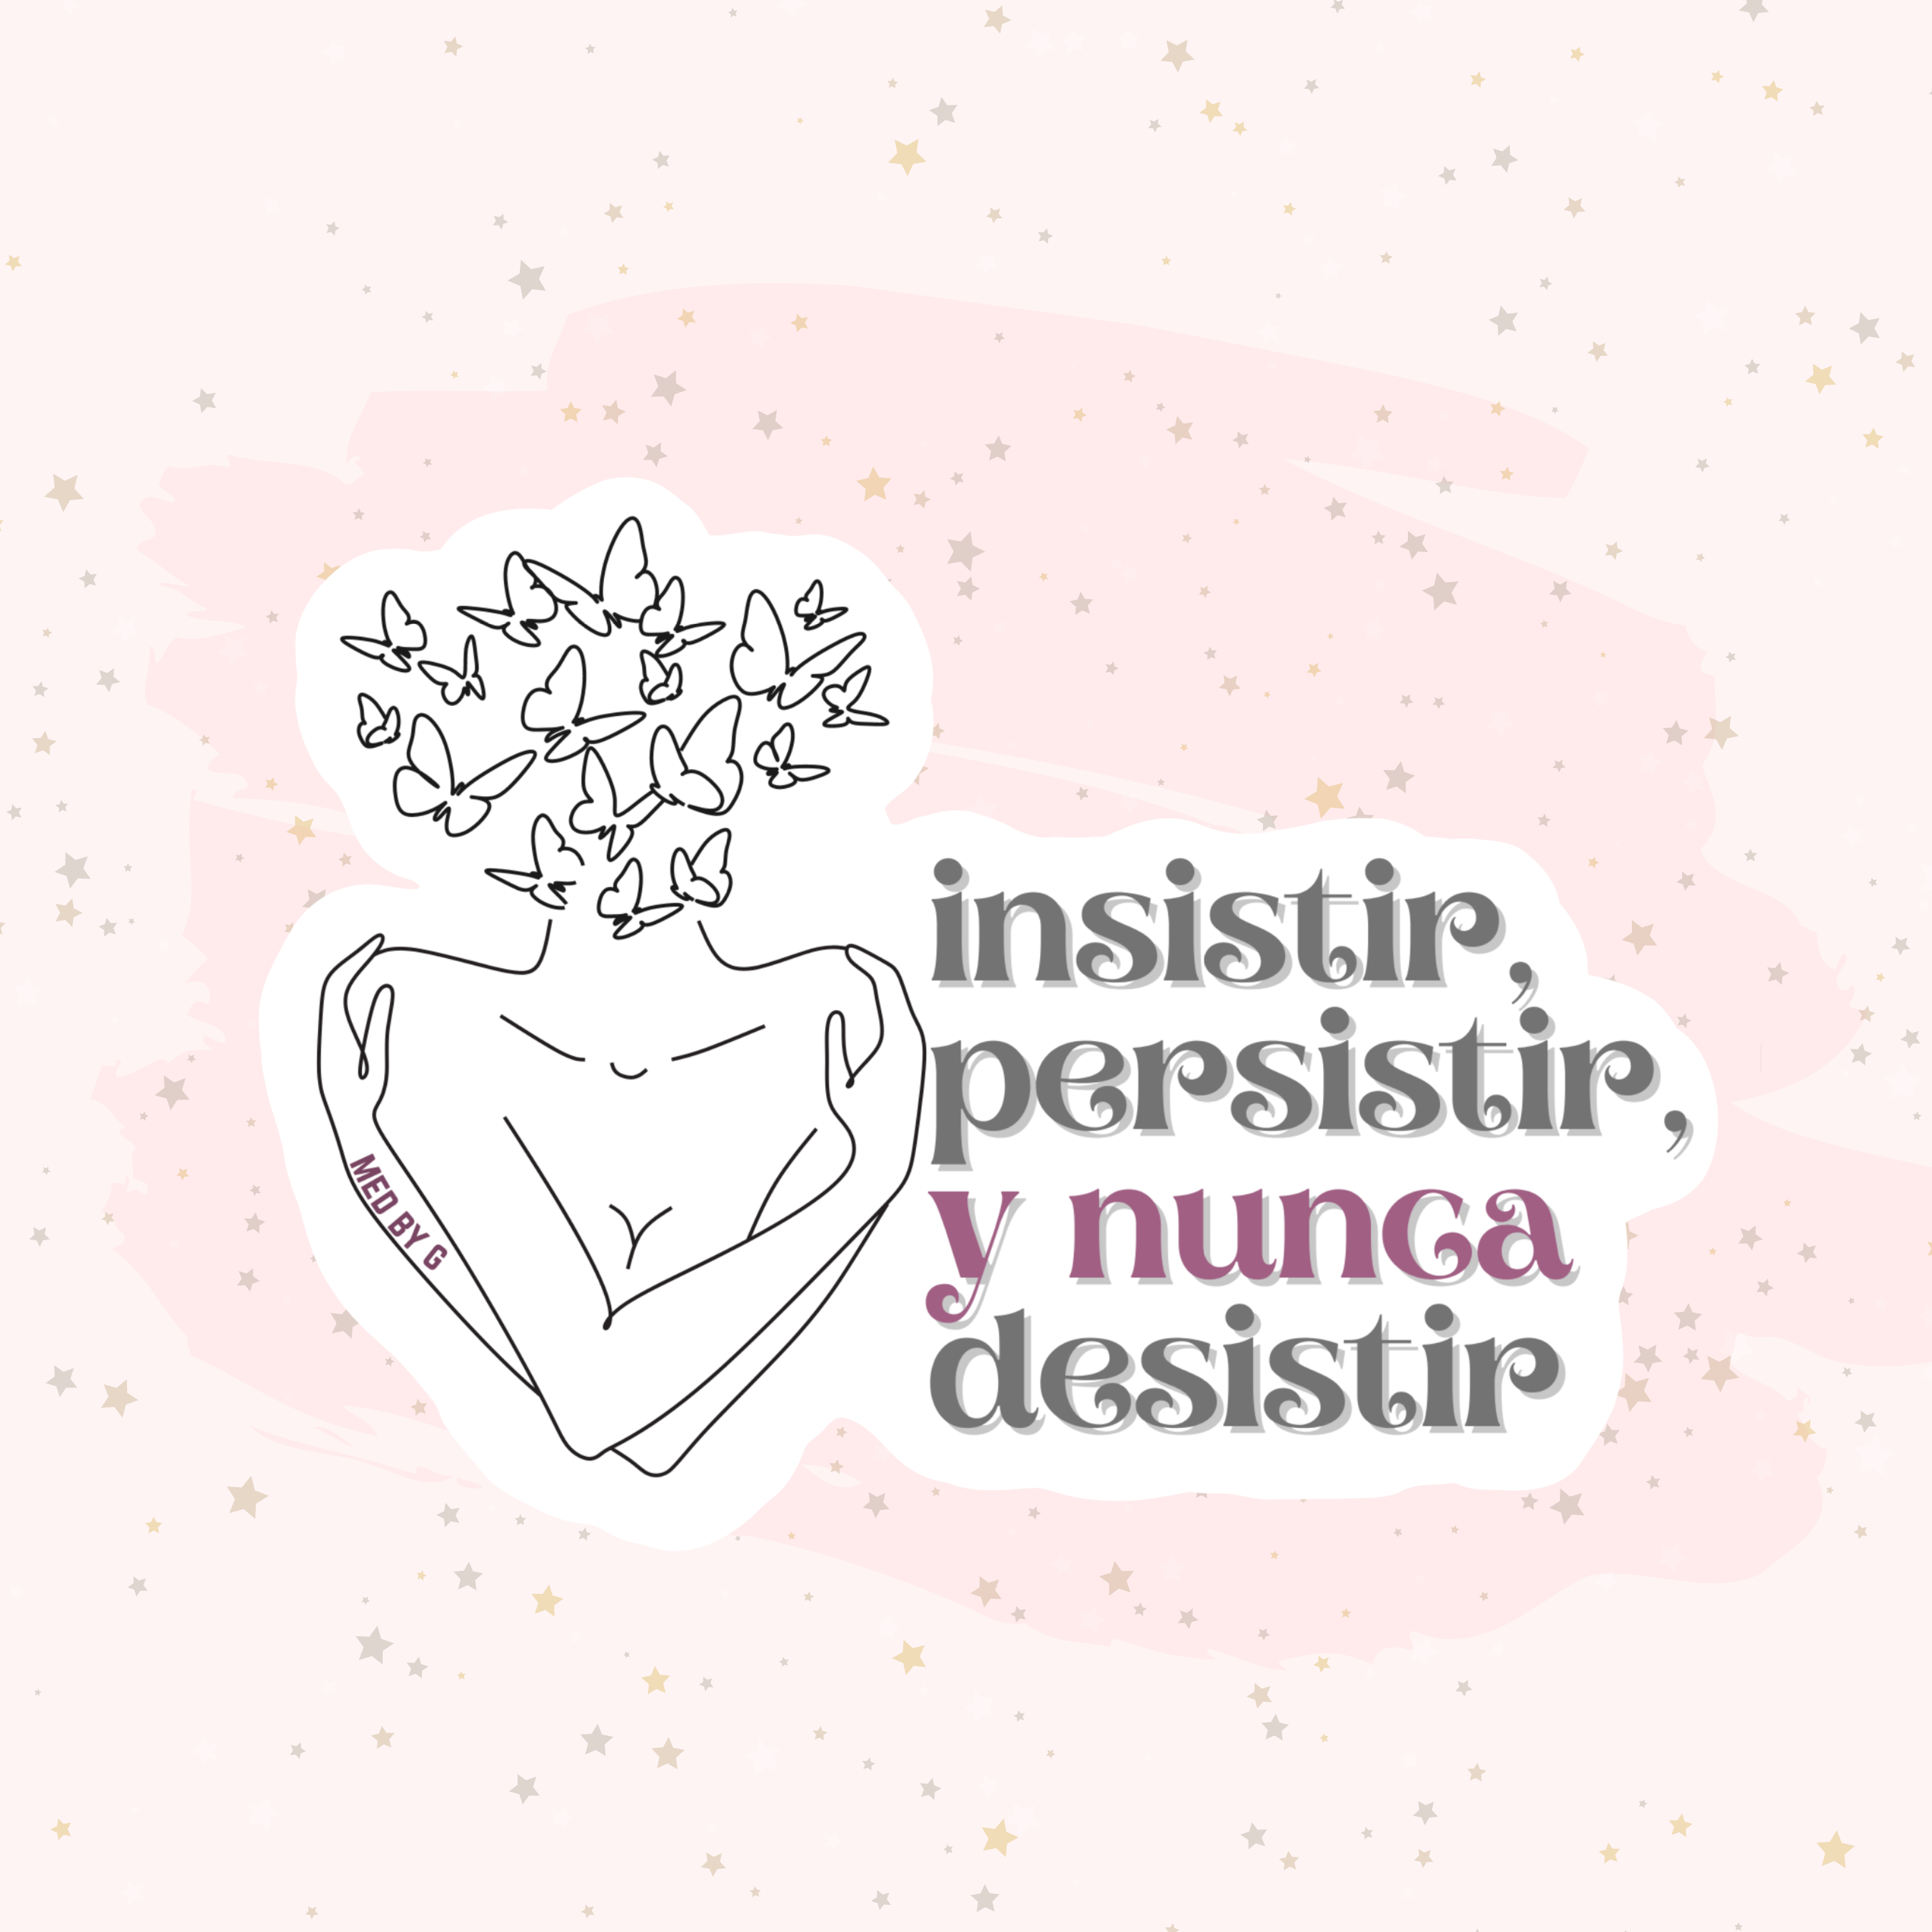 Español divertido - Funny Spanish Insistir Persistir Resistir Y Nunca  Desistir Essential T-Shirt Sticker for Sale by MarvinPhillip